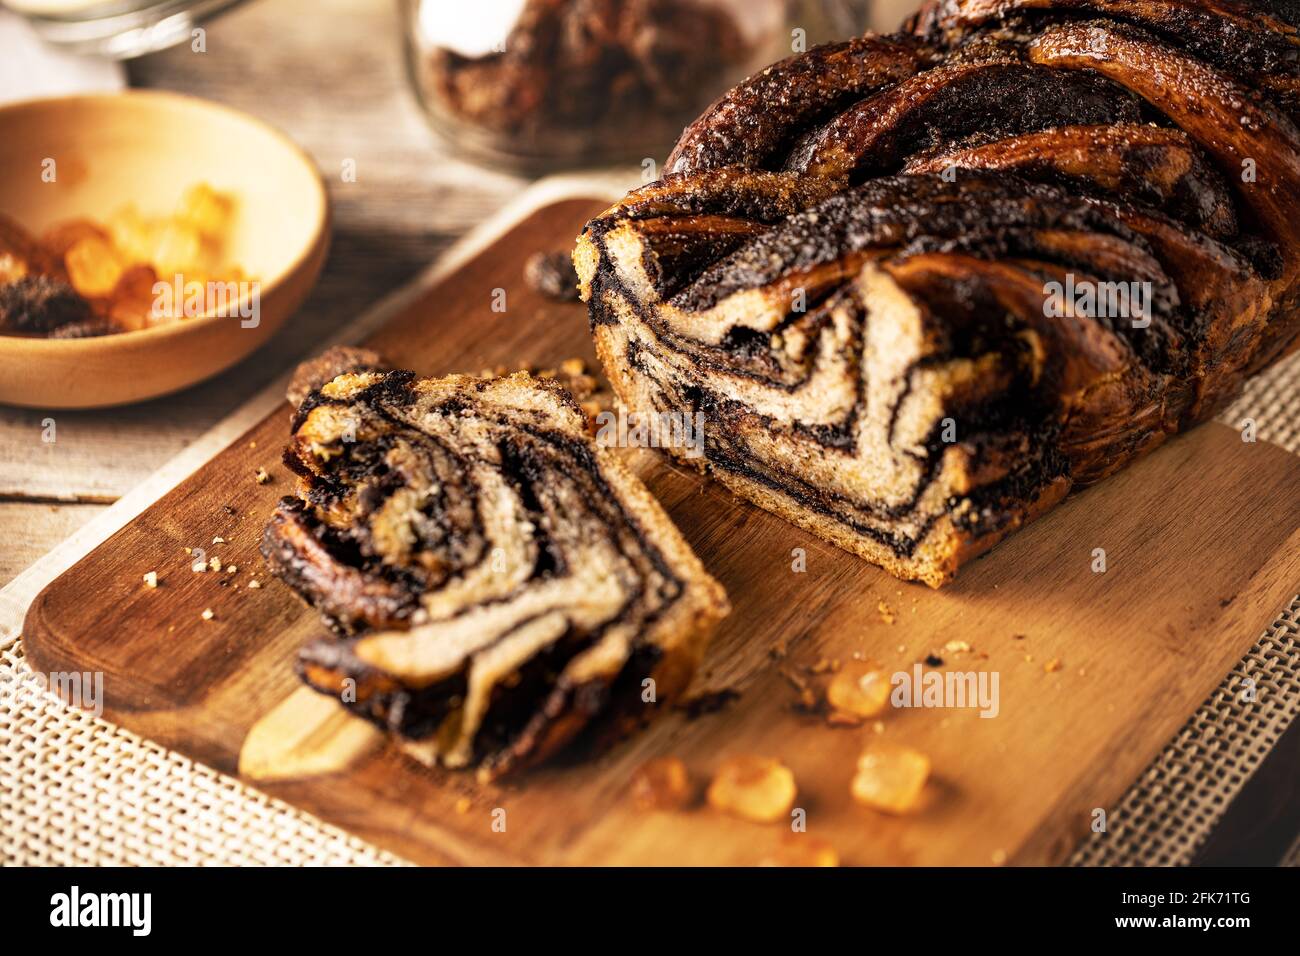 Chocolate babka or brioche bread. Stuffed with chocolate and hazelnut cream. Stock Photo